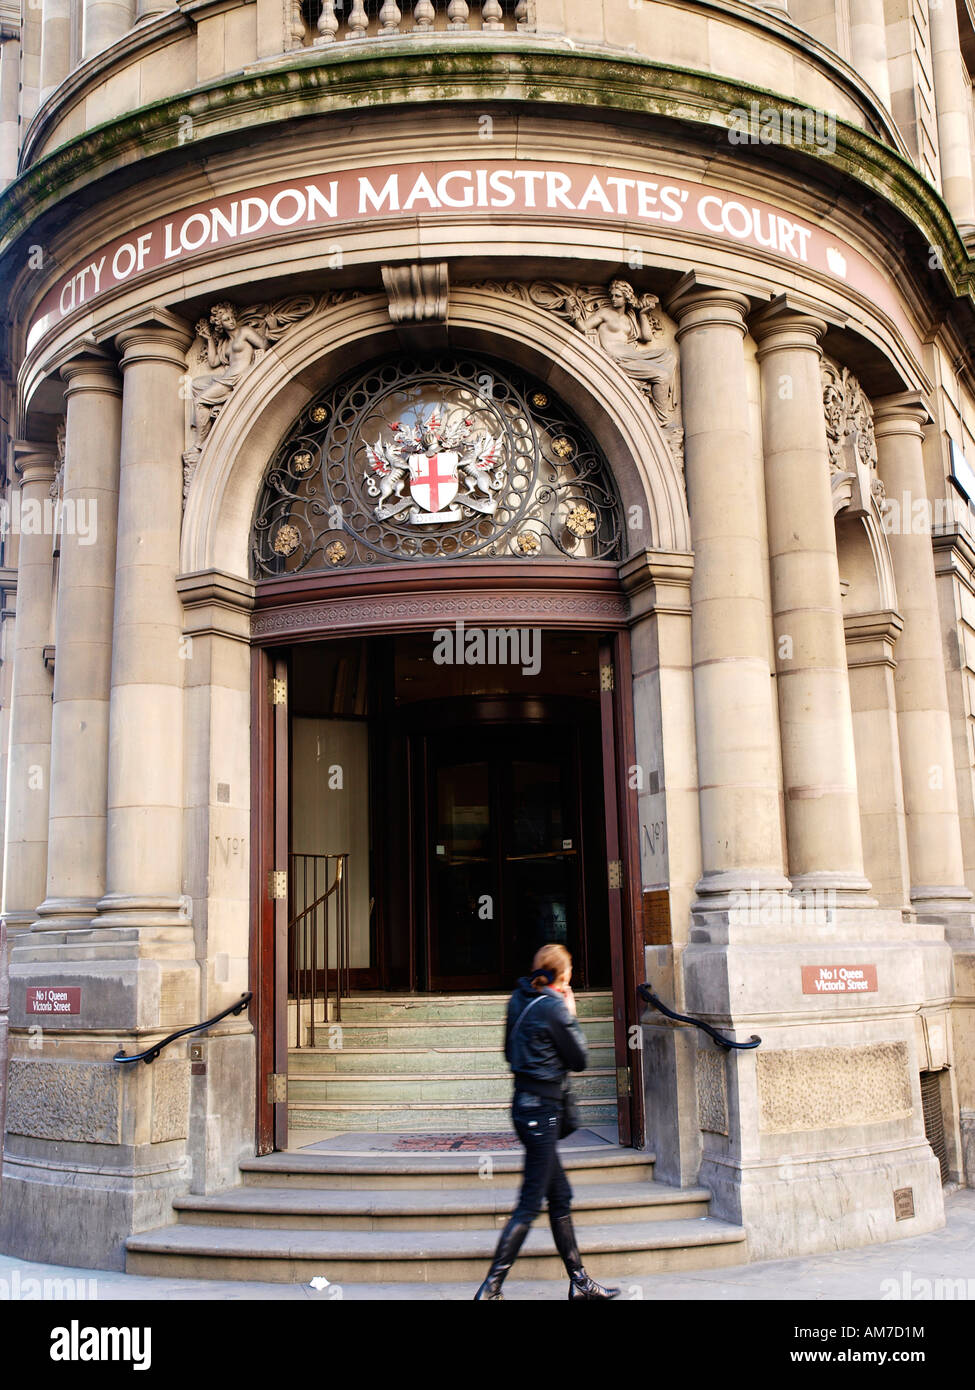 La città di Londra Magistrates Court, 1 Queen Victoria Street, London EC4N 4XY Foto Stock